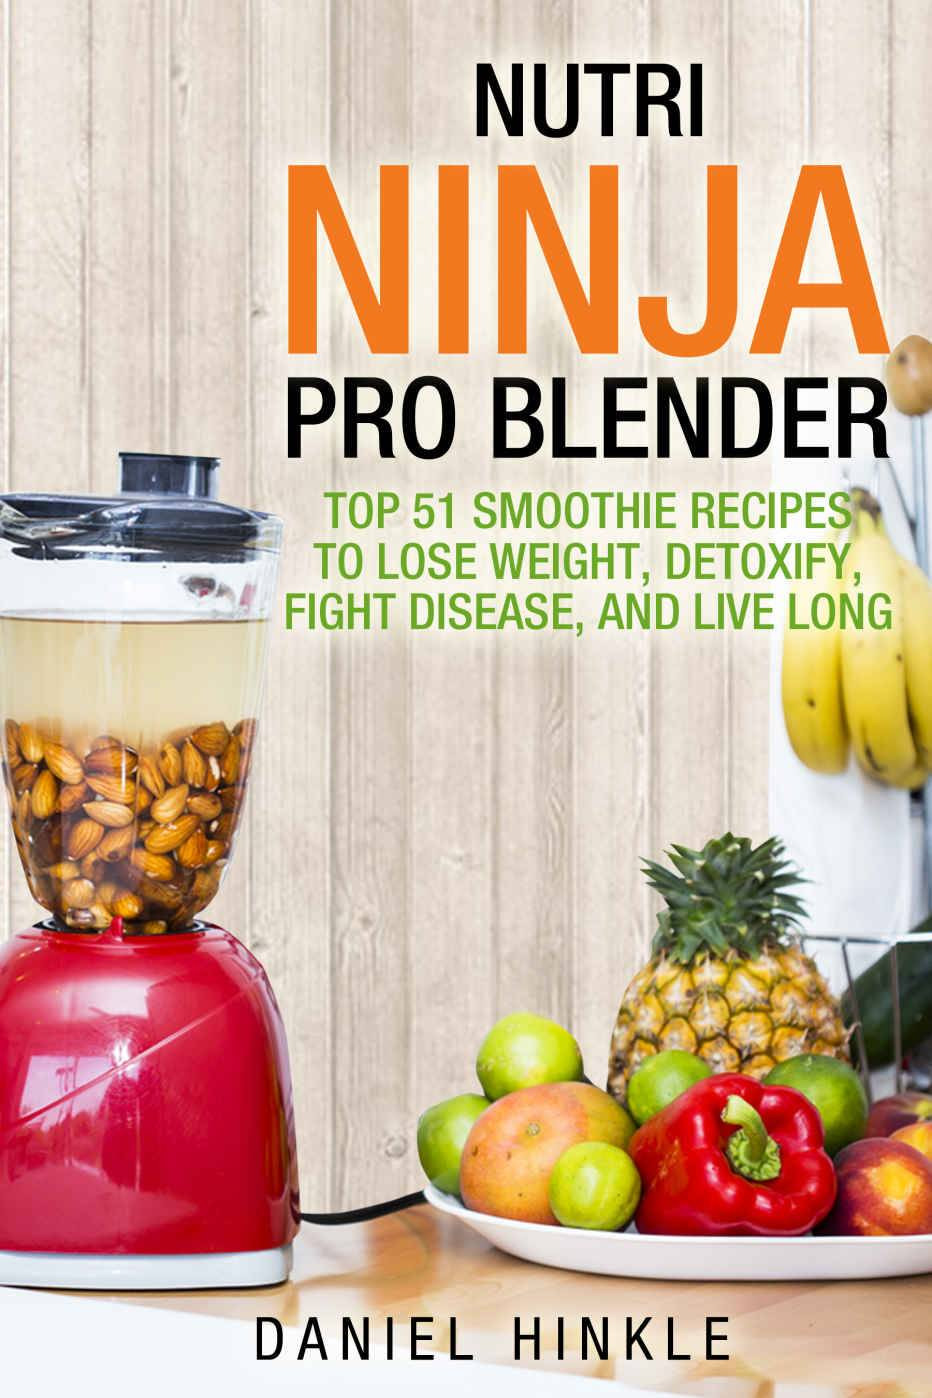 Nutri Ninja Weight Loss Recipes
 Nutri Ninja Pro Blender Top 51 Smoothie Recipes to Lose